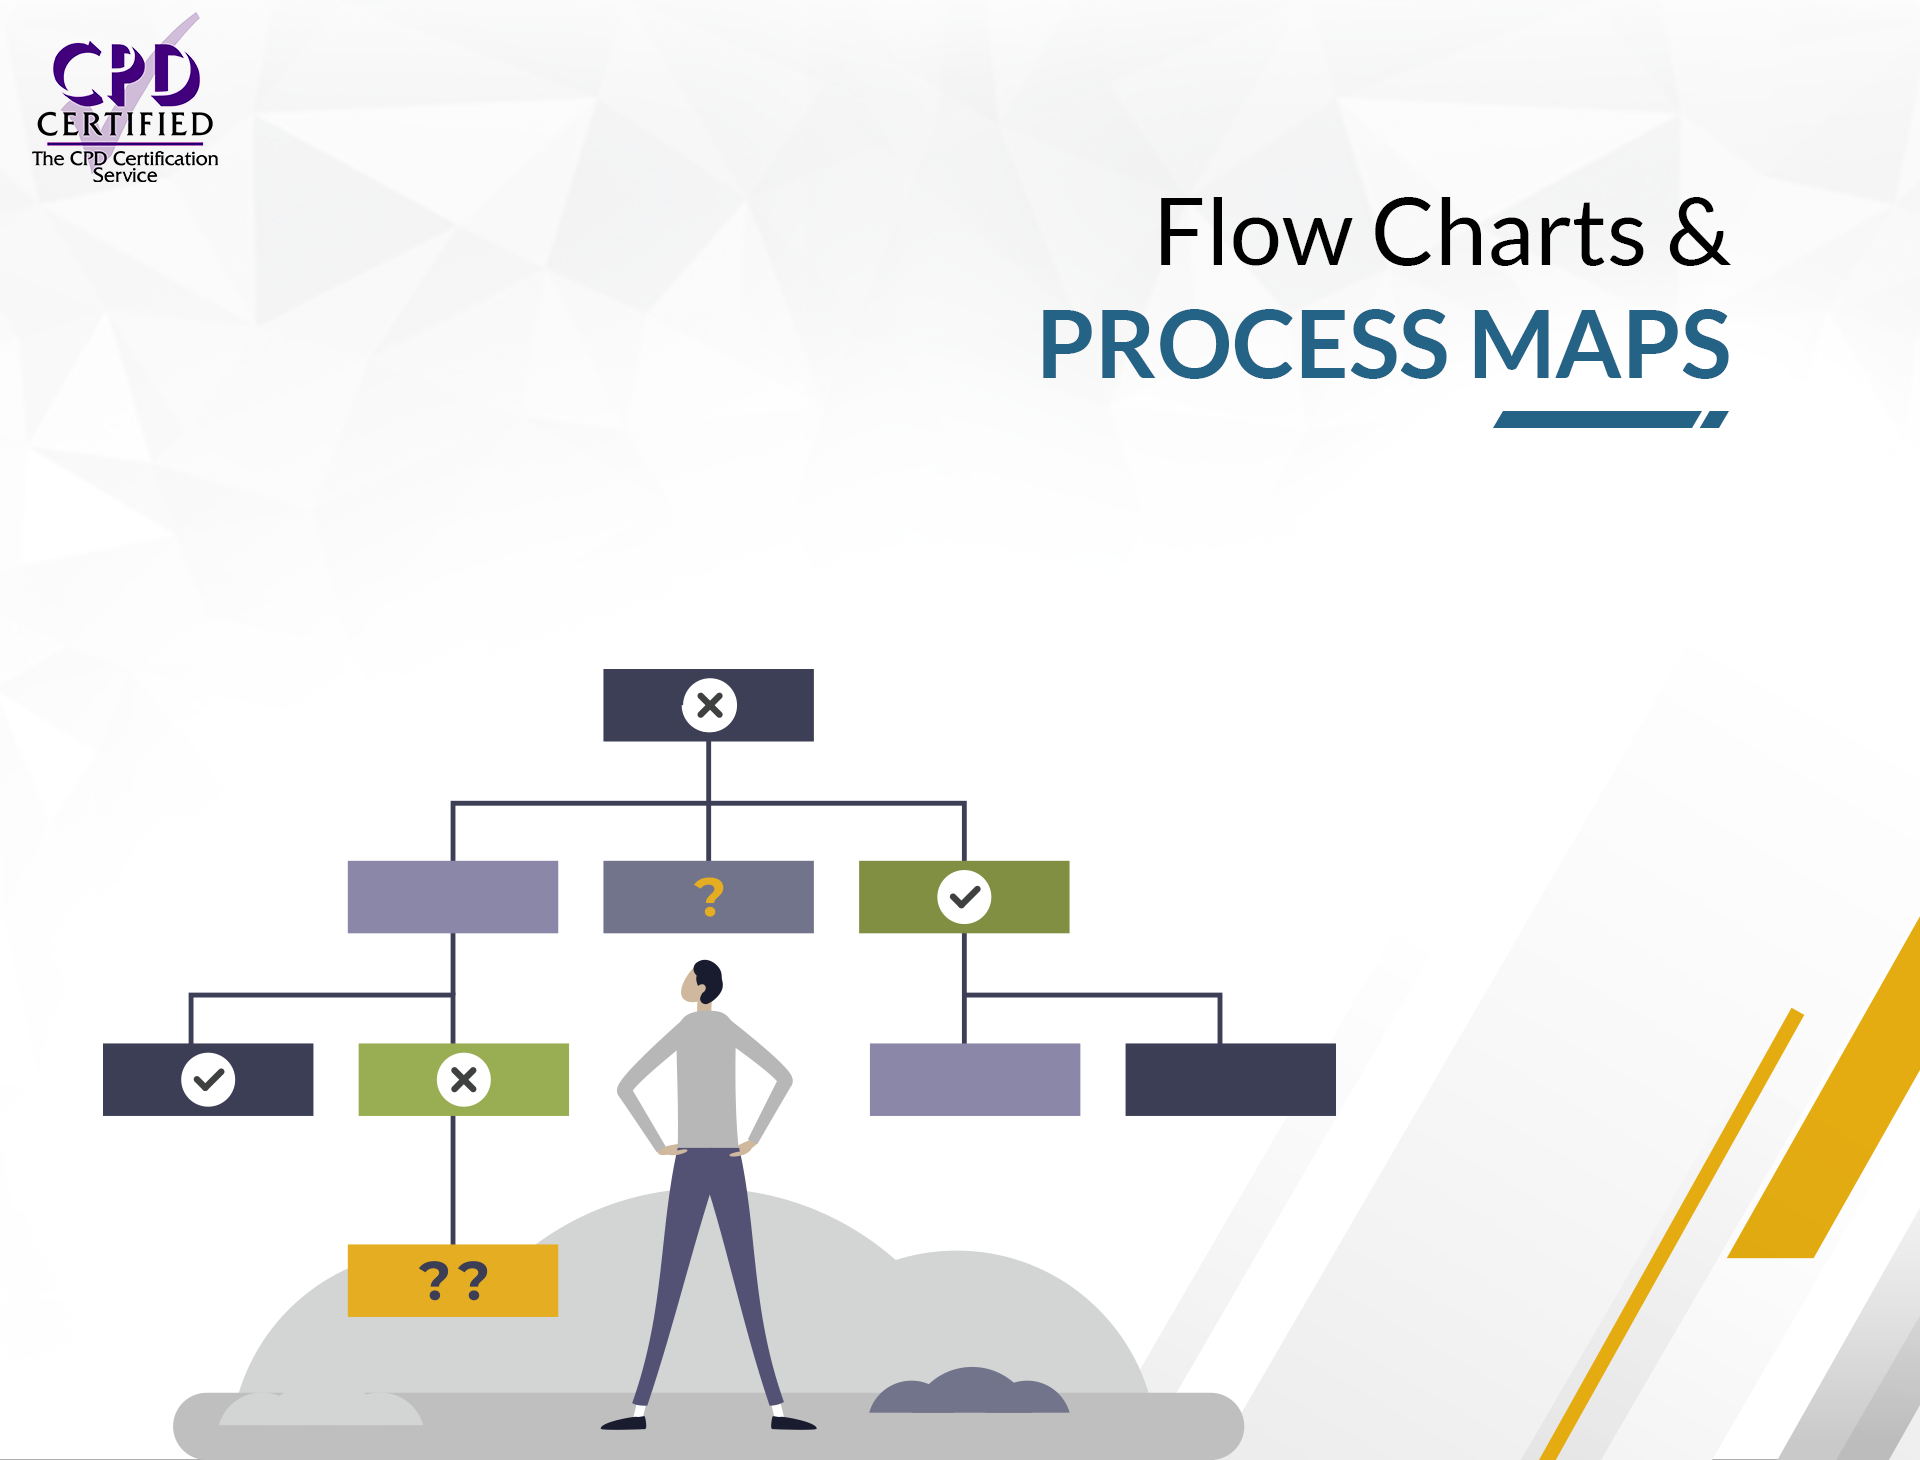 Flow Charts & Process Maps